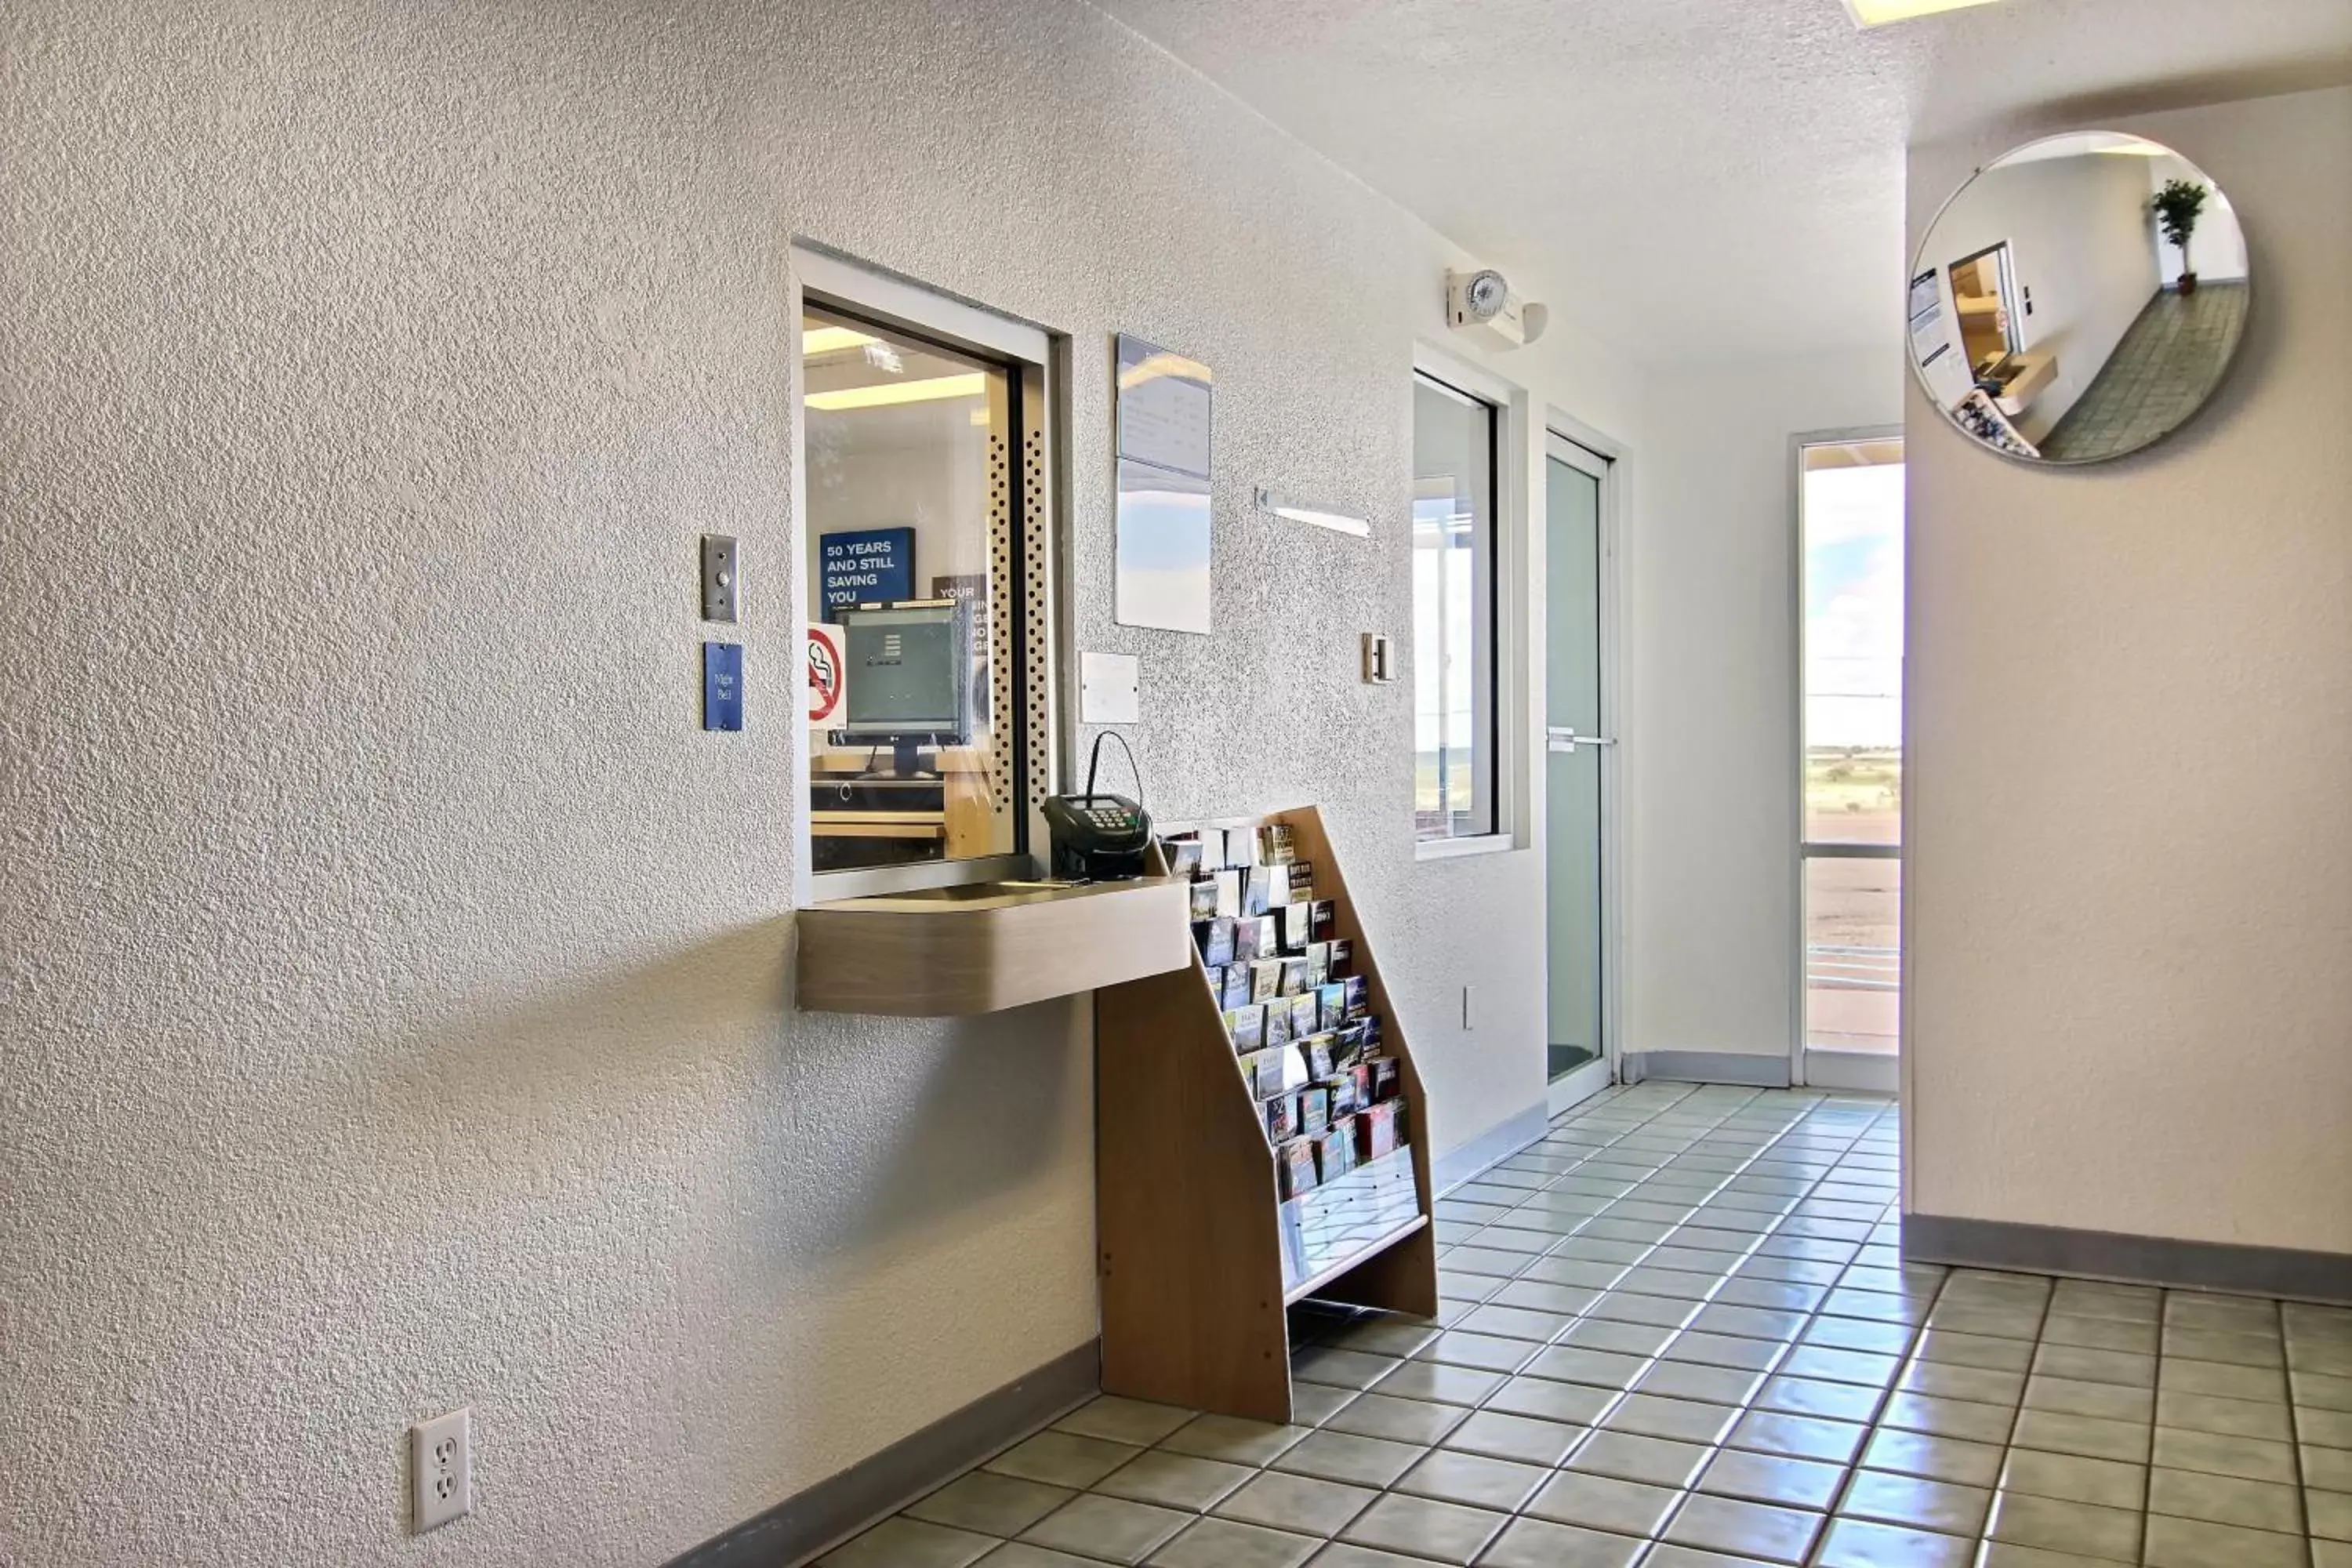 Lobby or reception in Motel 6-Tucumcari, NM